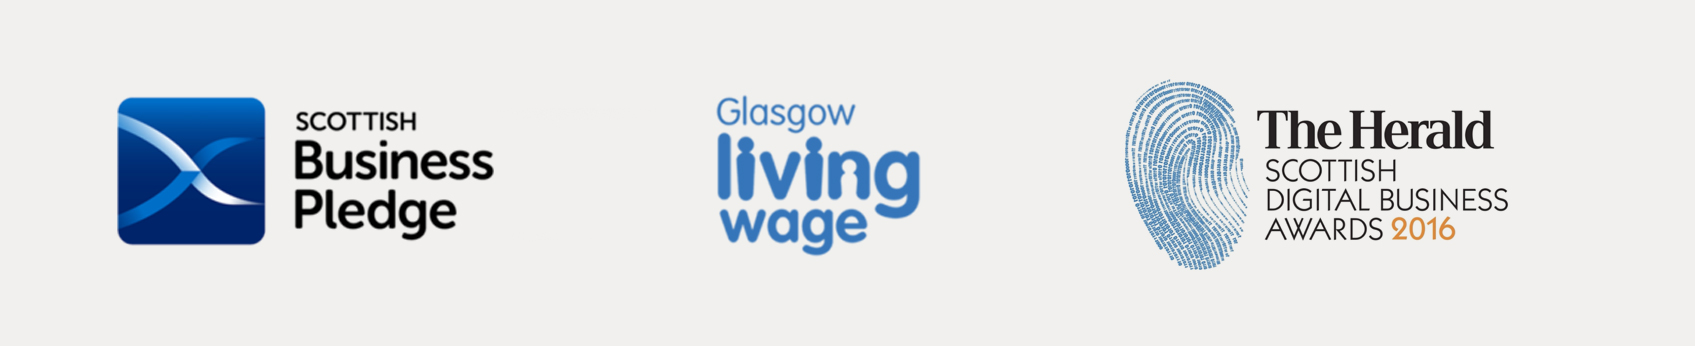 Scottish Business Pledge, Glasgow Living Wage, The Herald Scottish Digital Business Awards